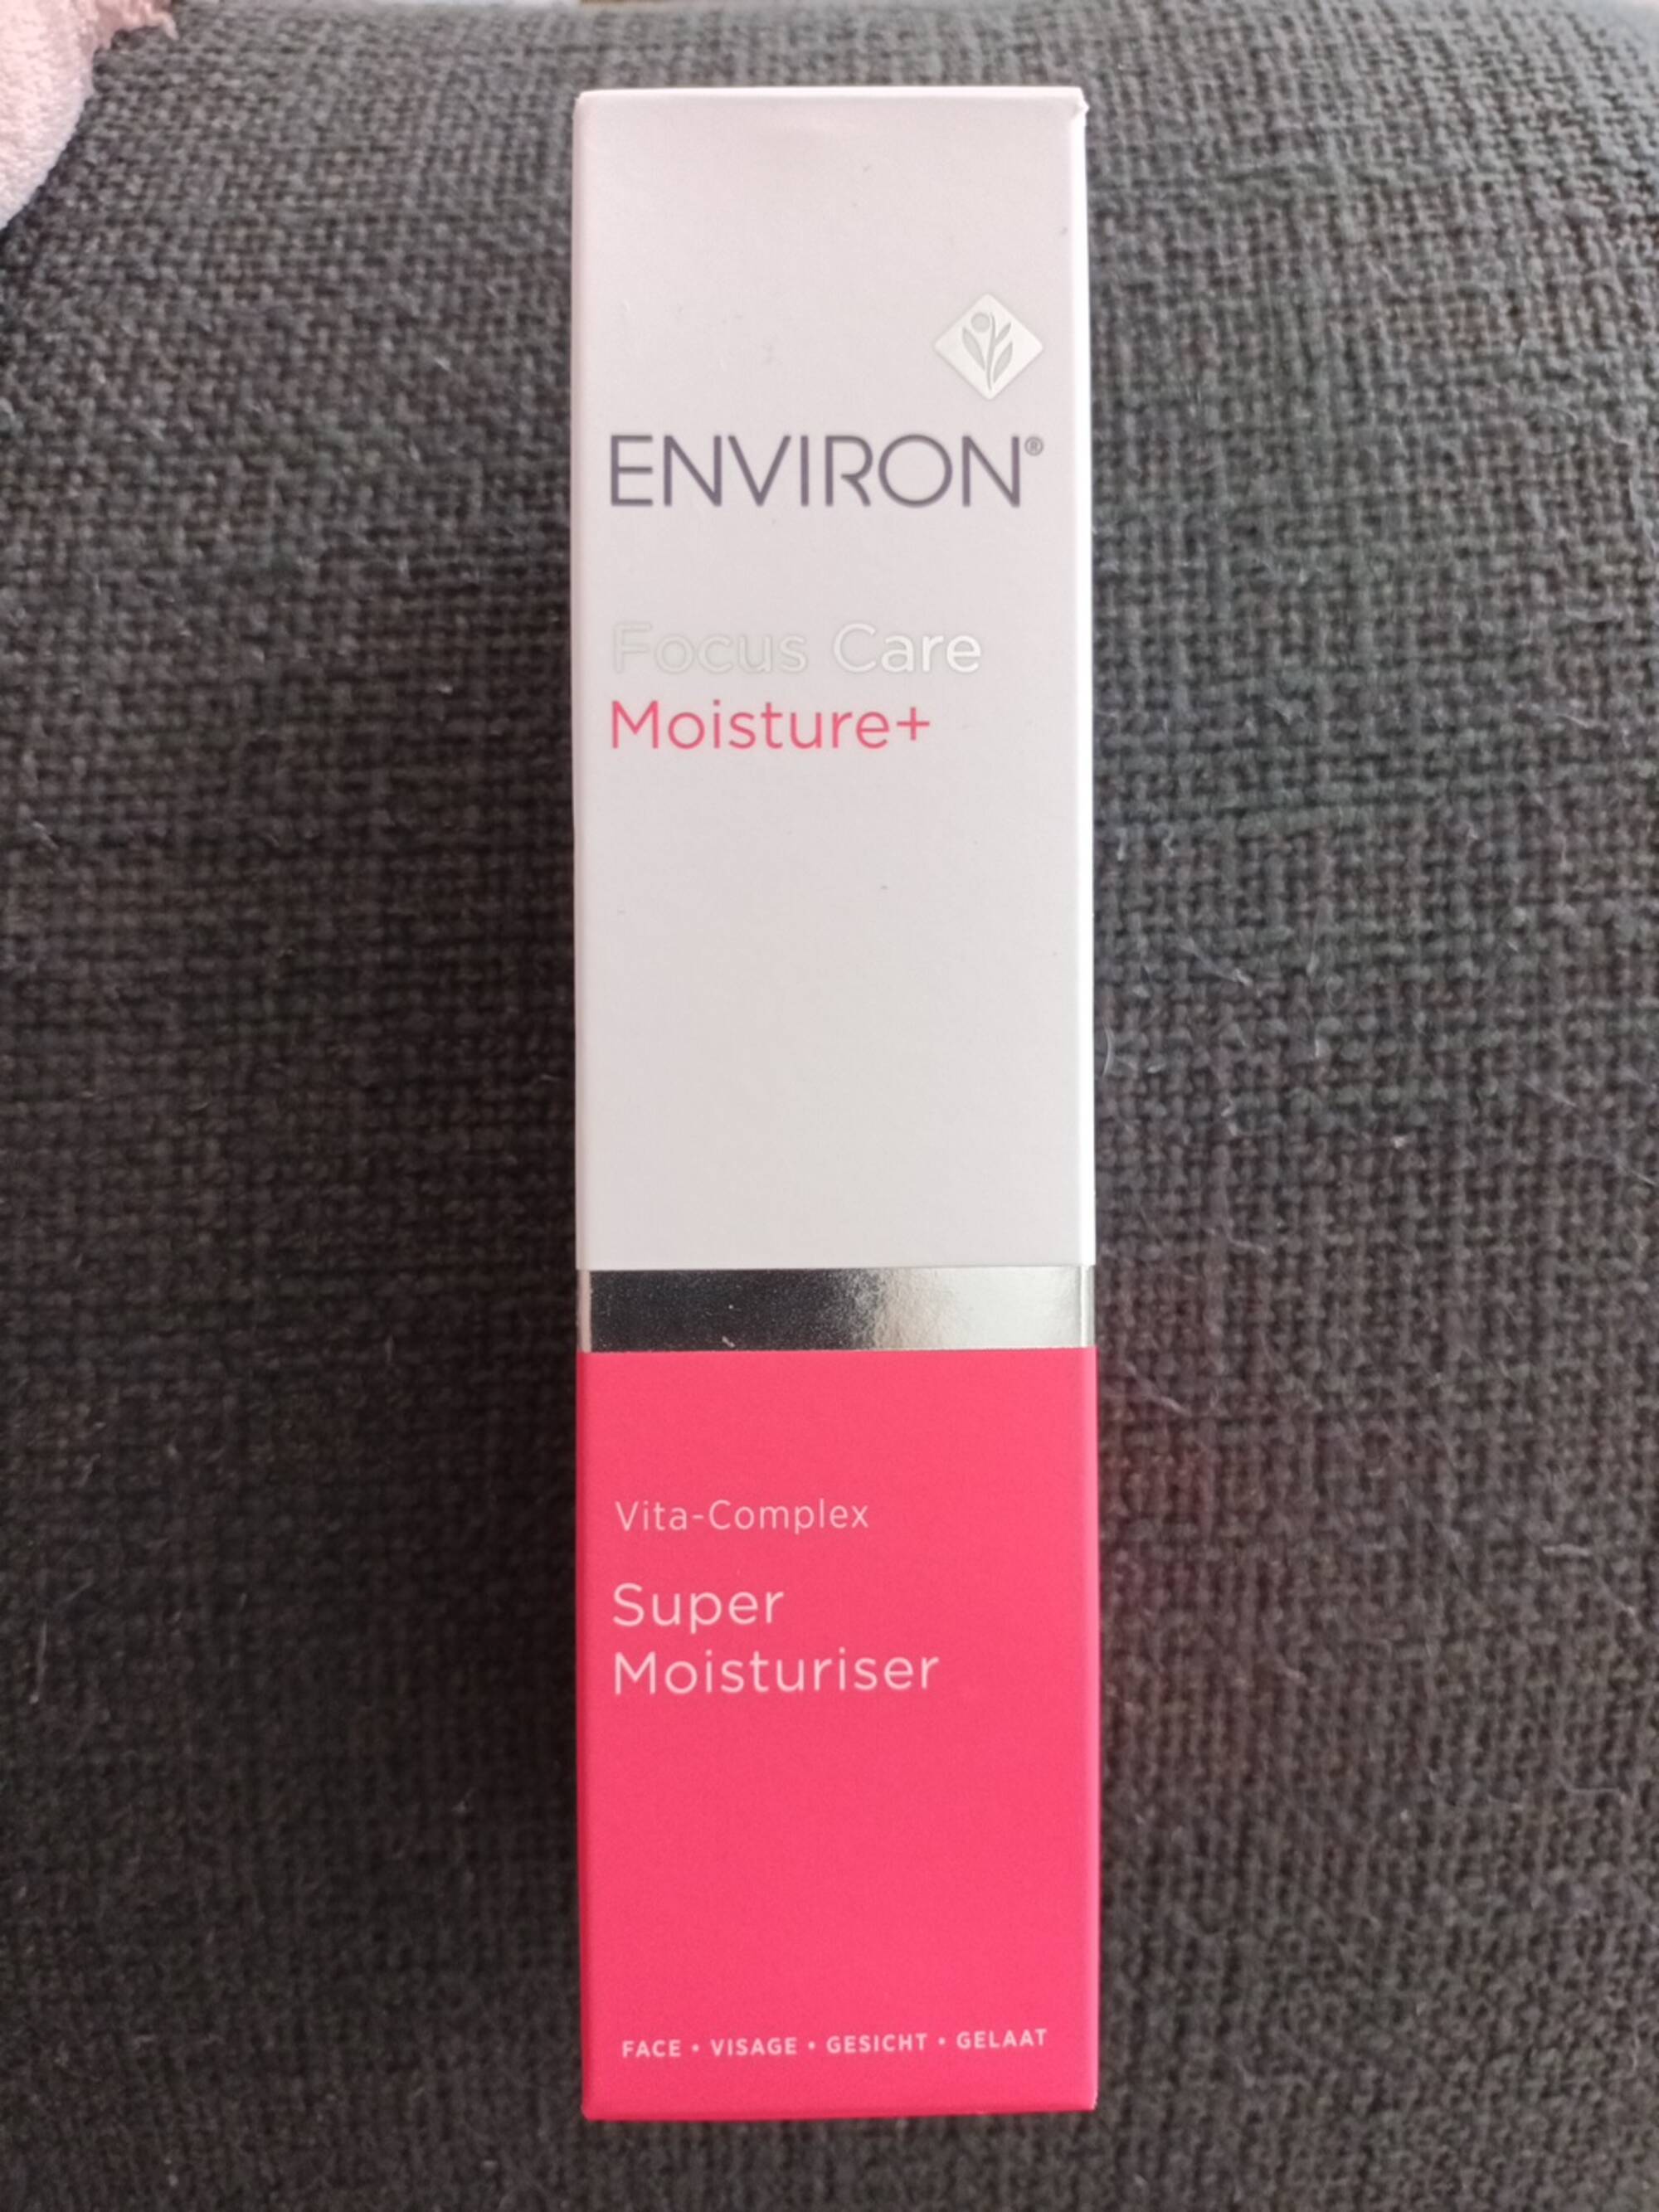 ENVIRON - Focus care moisture+ visage